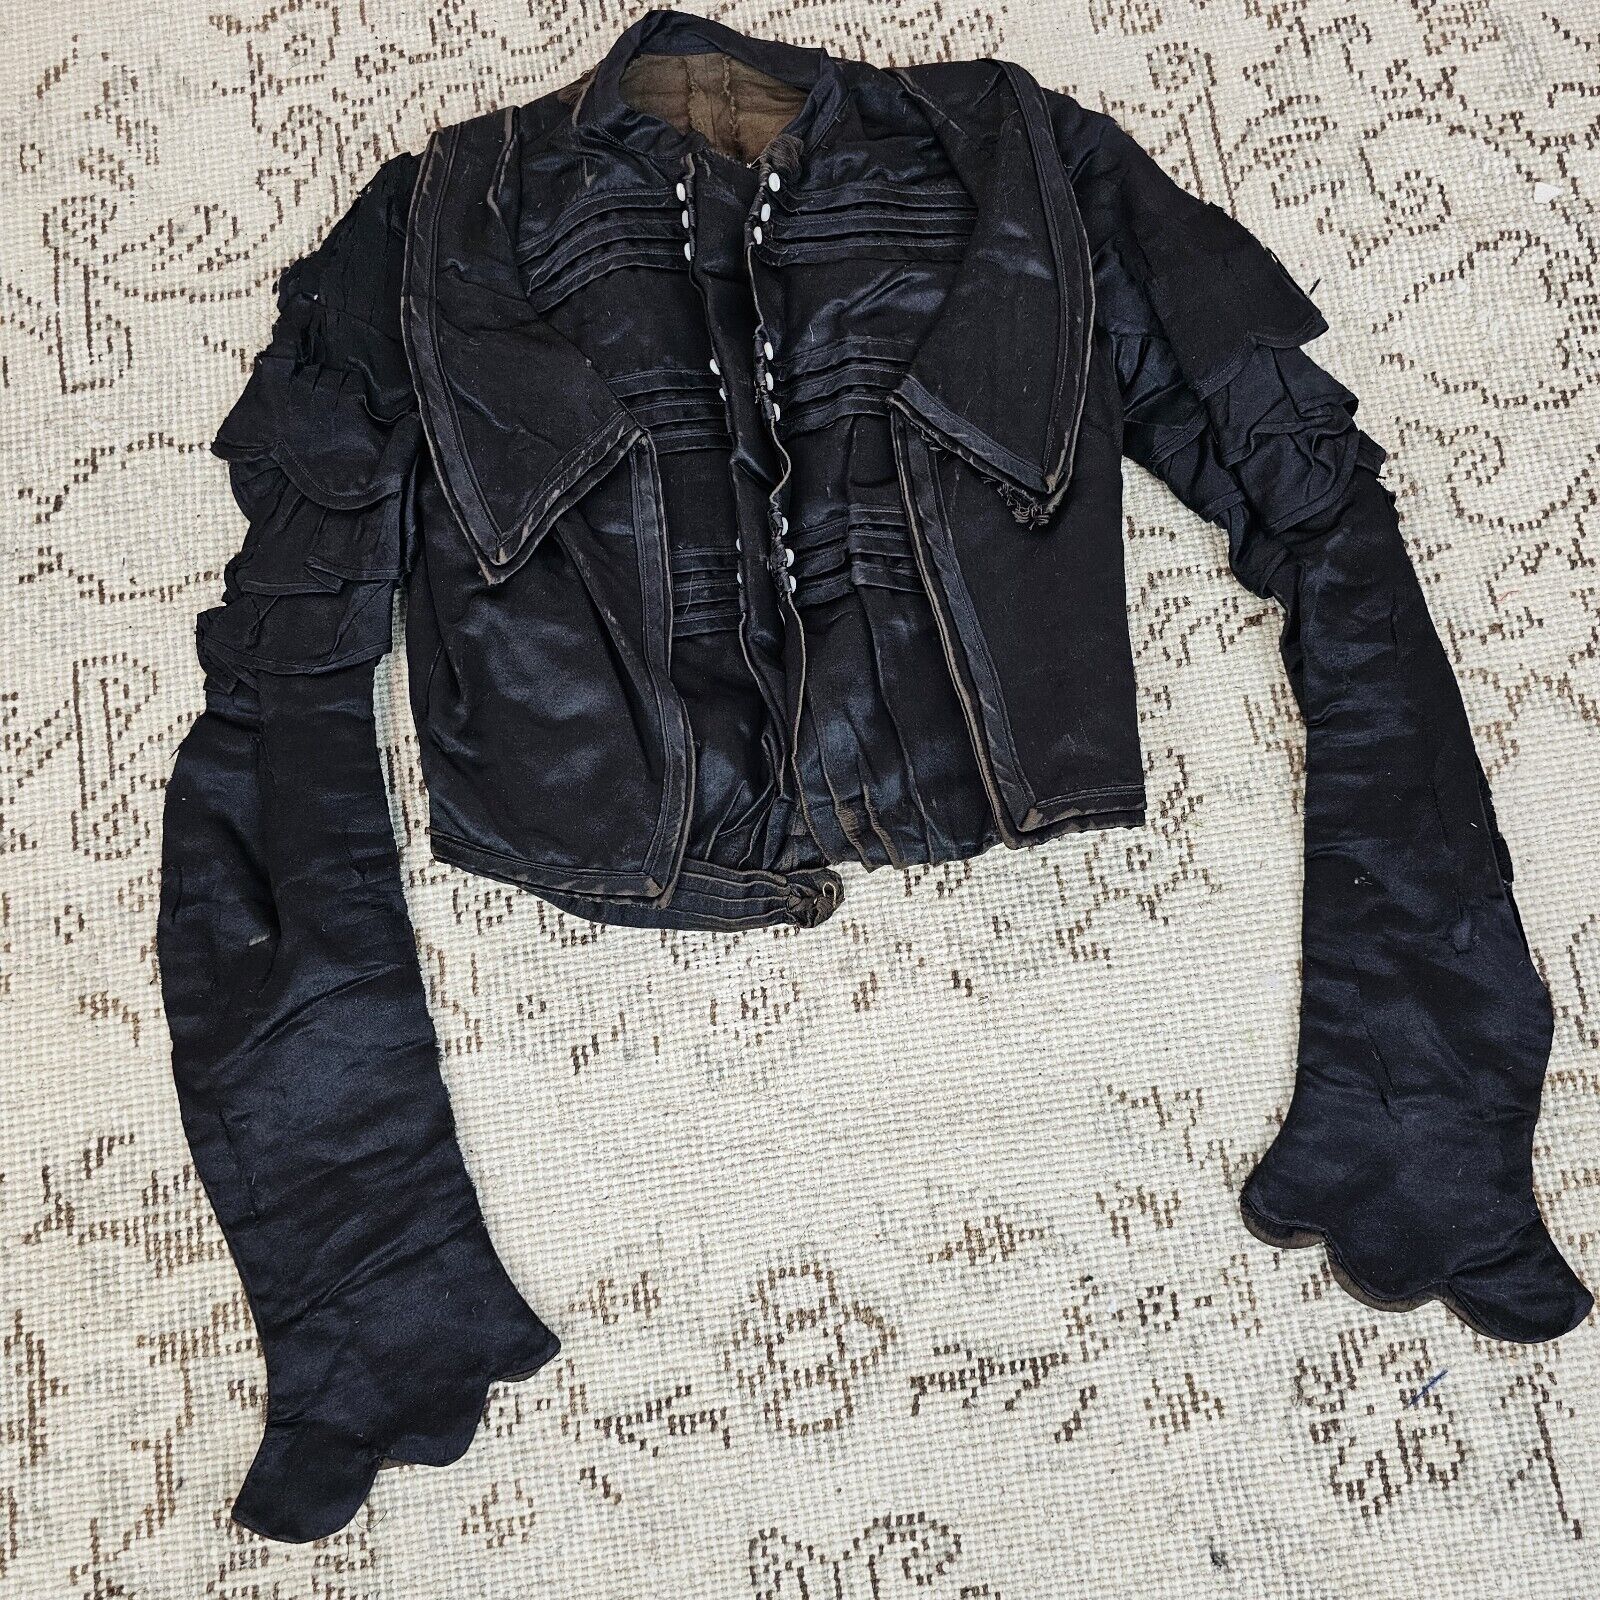 Antique Victorian 1890s Gothic Silk Black Layerd Blouse Top Shirt Dress Bodice